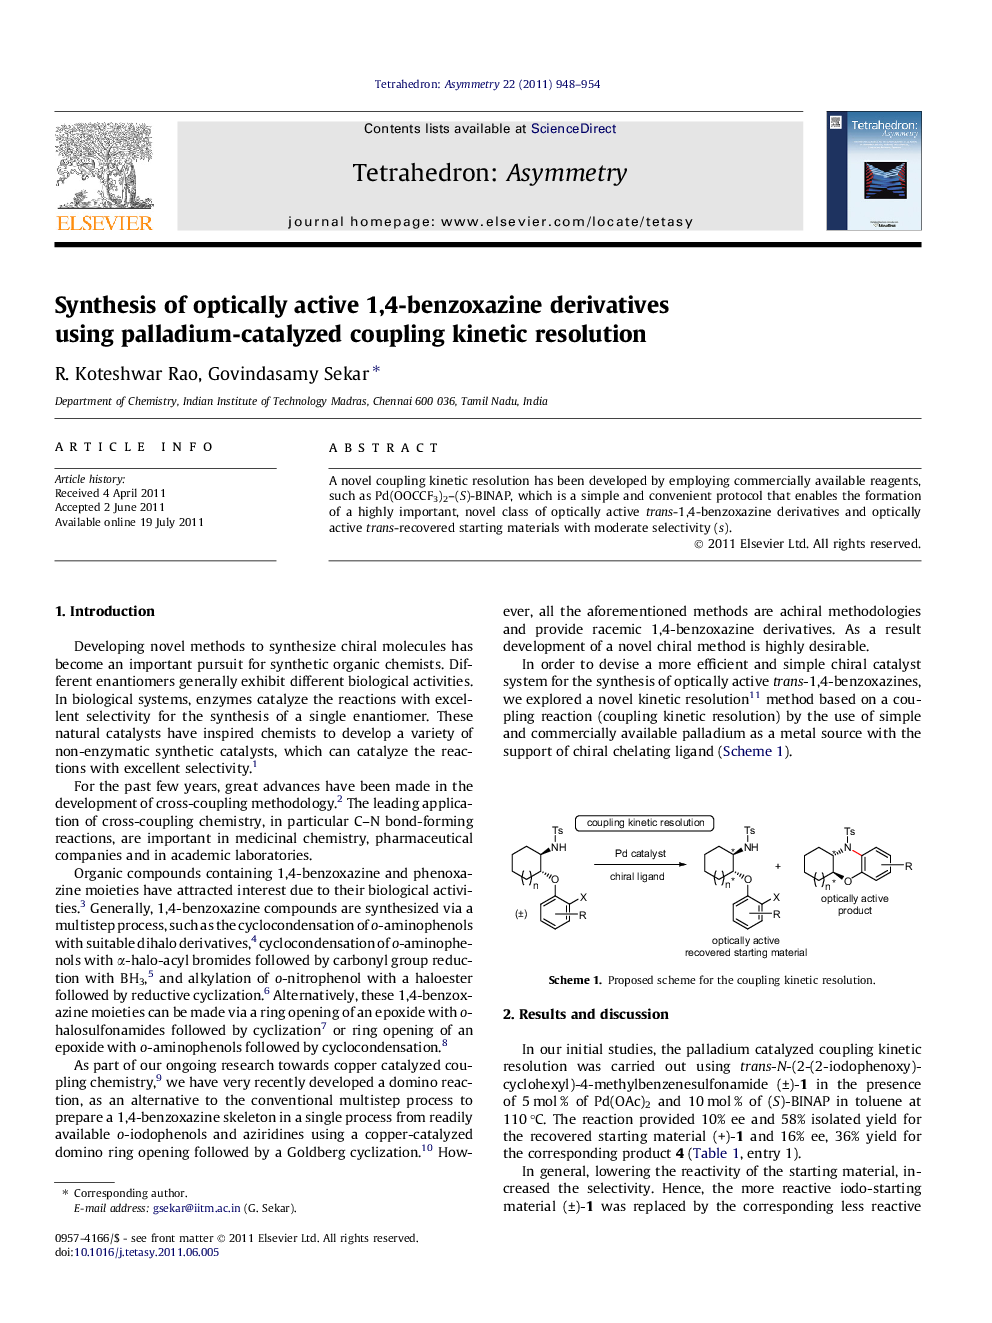 Synthesis of optically active 1,4-benzoxazine derivatives using palladium-catalyzed coupling kinetic resolution